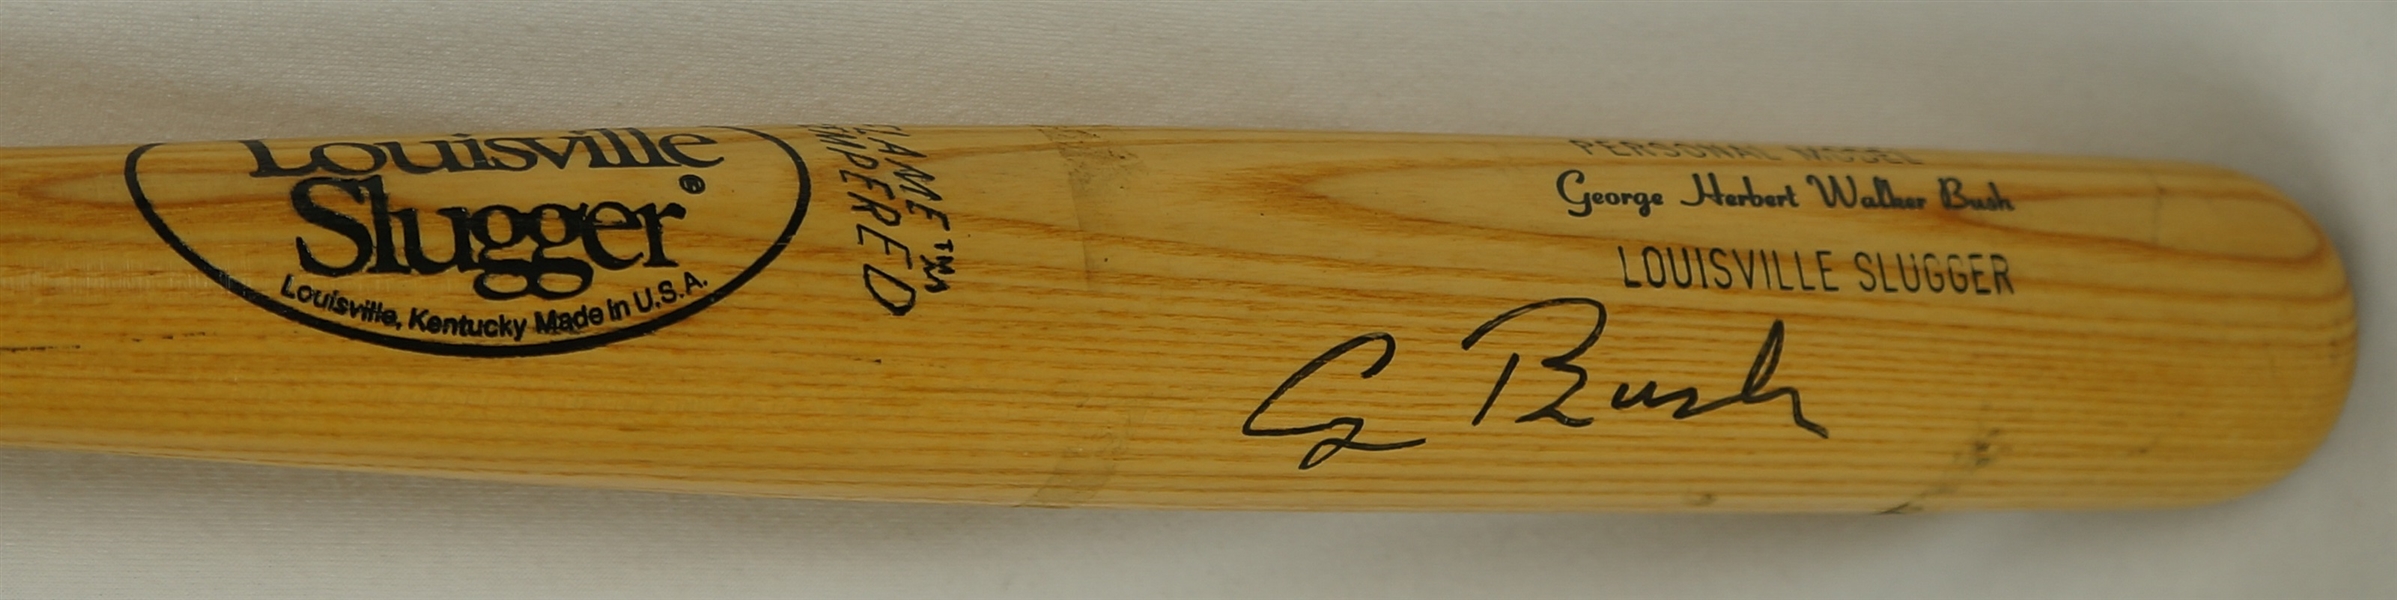 George Herbert Walker Bush Autographed Louisville Slugger Bat